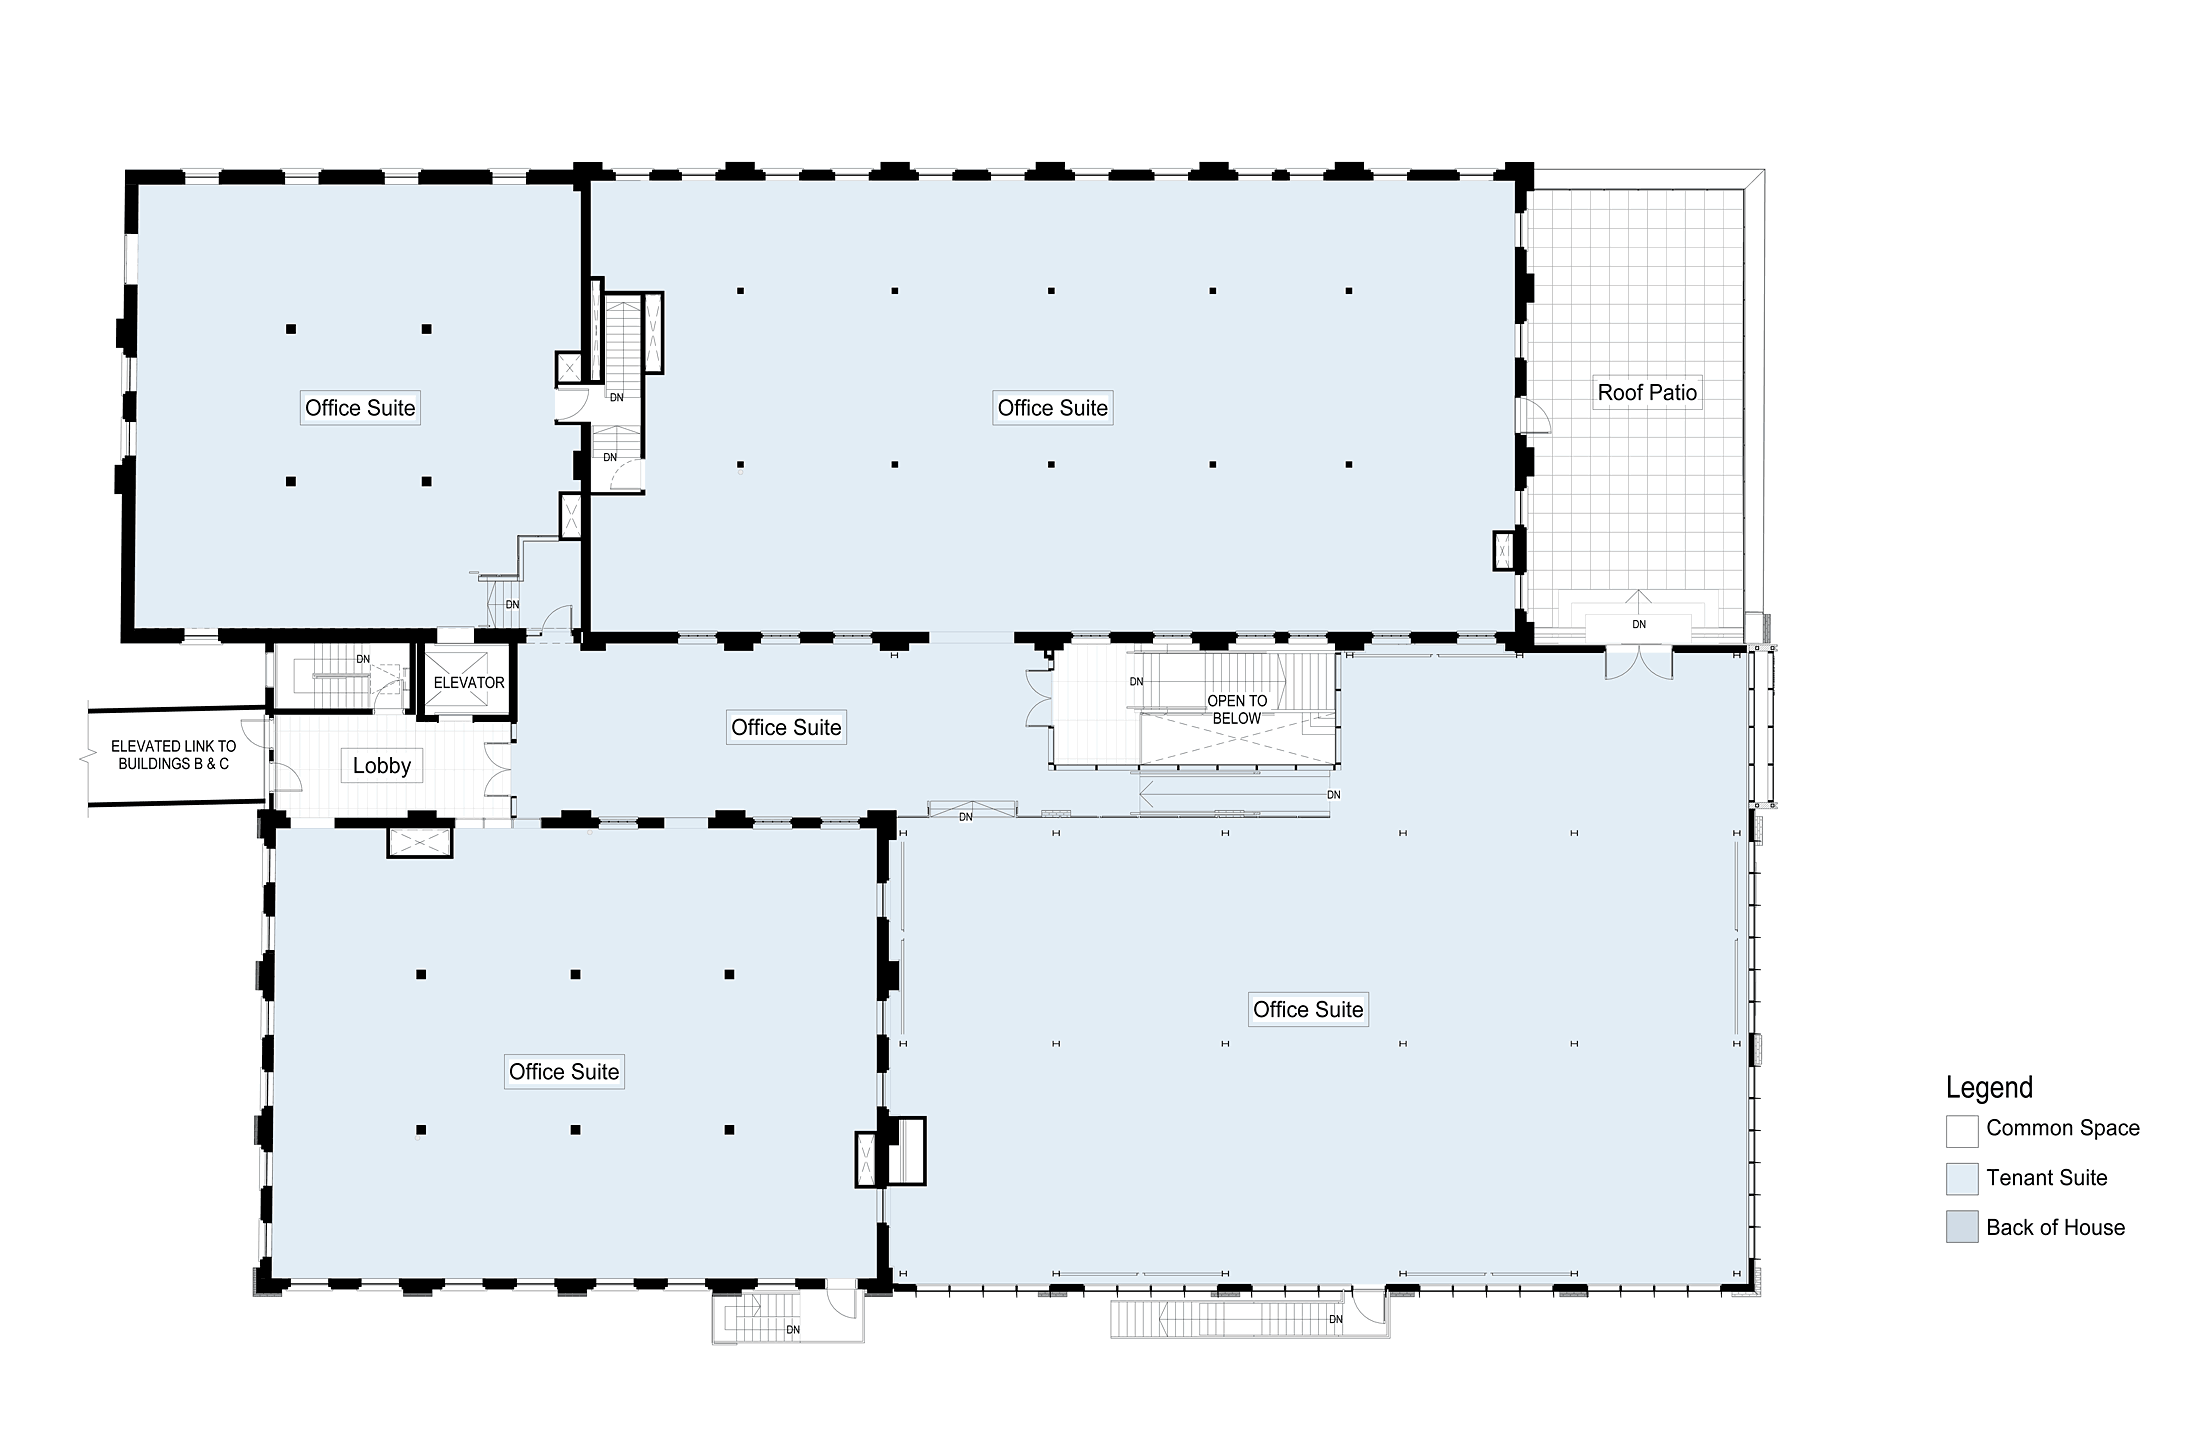 Building A Ground Floor Floorplan